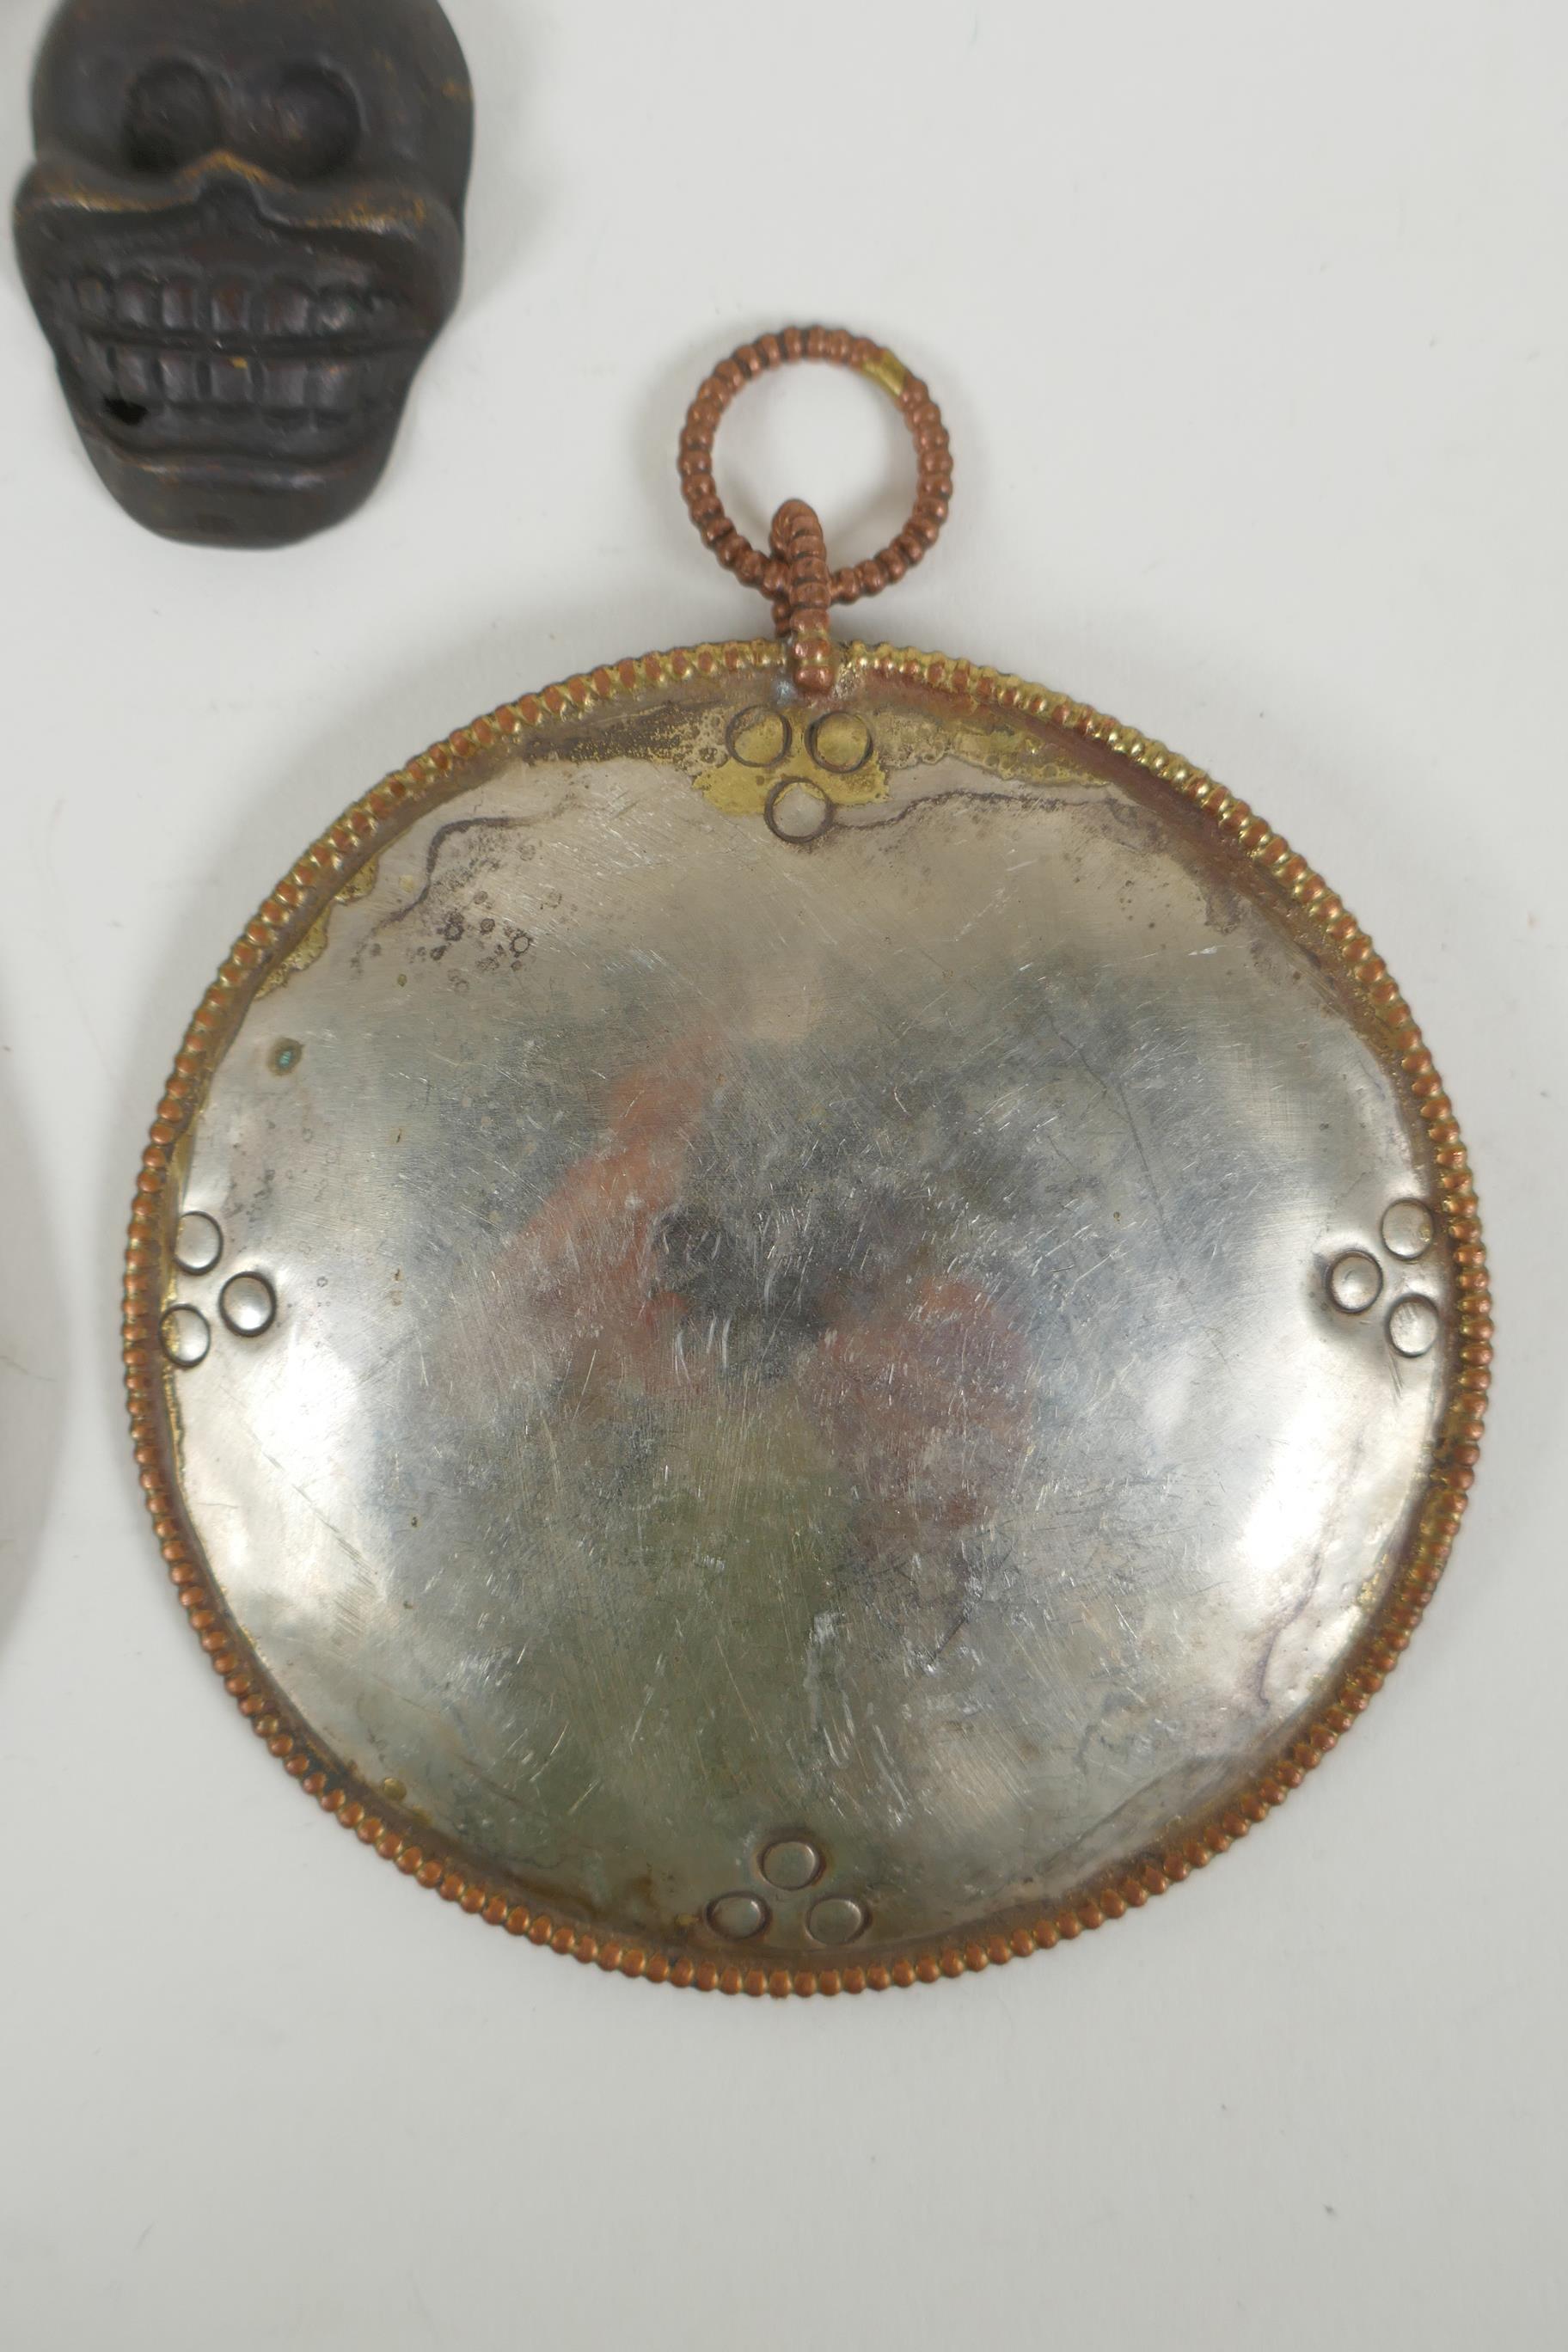 A Tibetan metal calendar, a convex mirror pendant and a cast iron skull pendant, 10cm diameter - Image 4 of 5